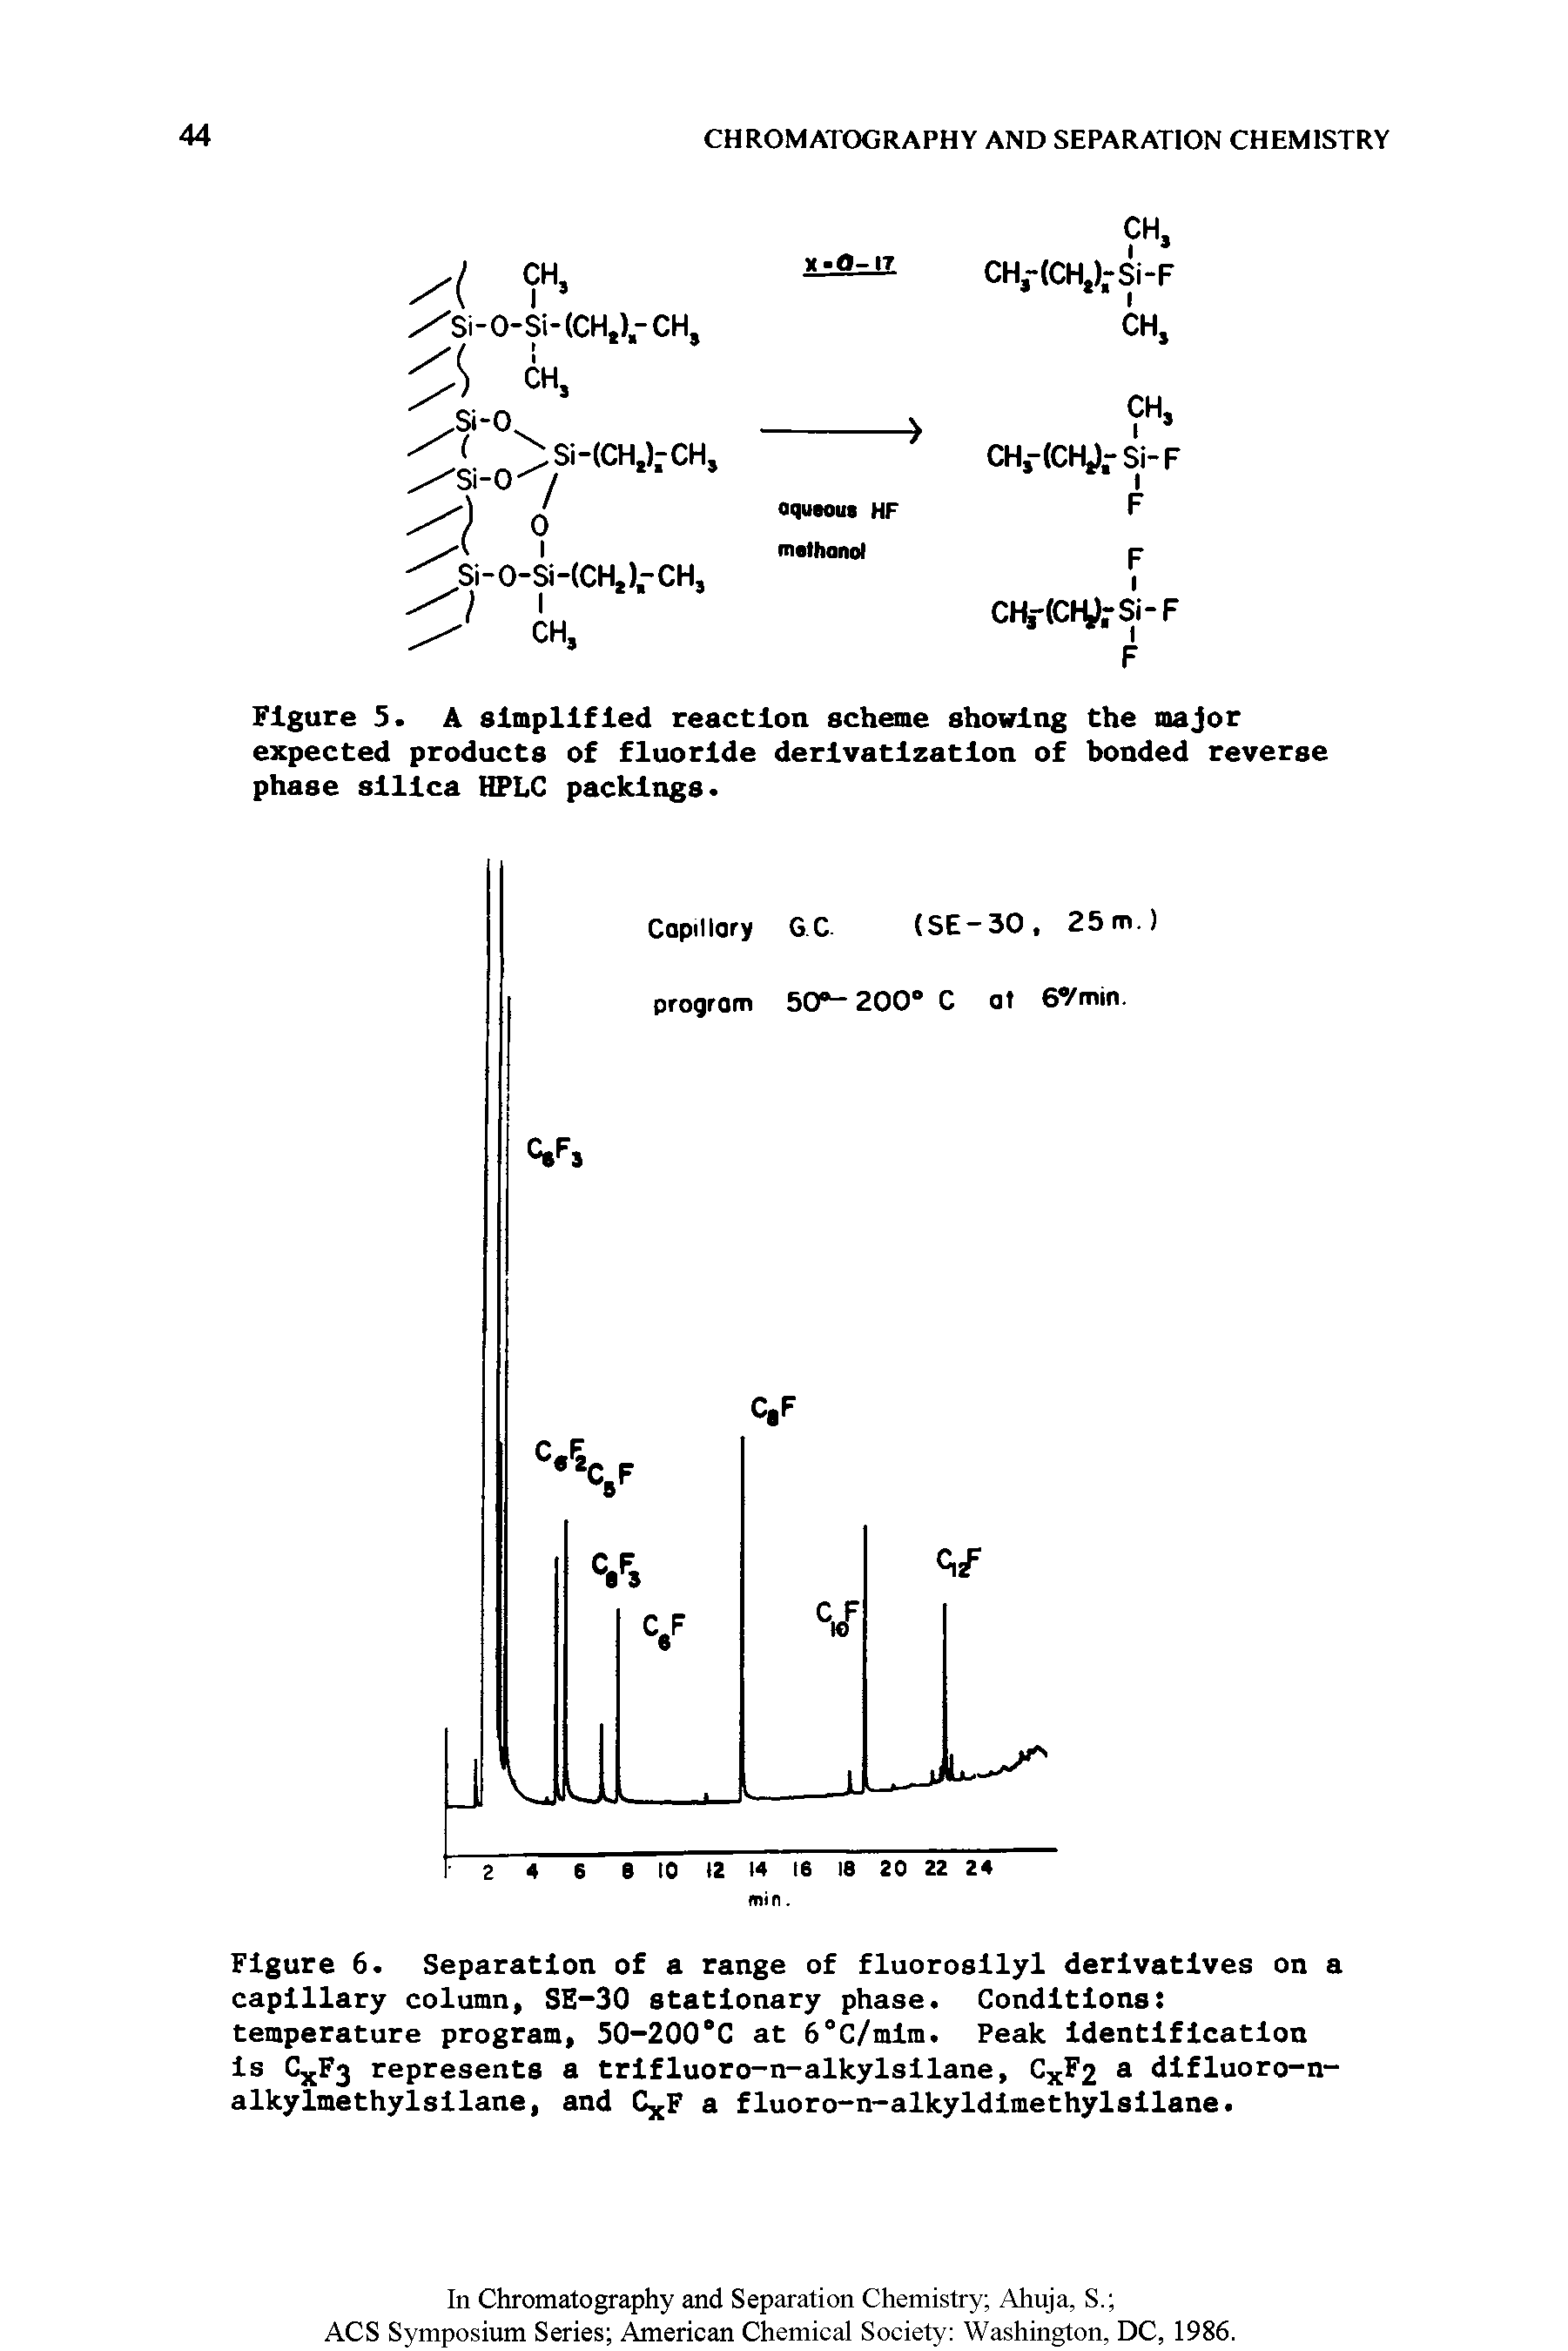 Figure 6. Separation of a range of fluorosllyl derivatives on a capillary column, SG-30 stationary phase. Conditions temperature program, 50-200 C at 6°C/mlm. Peak Identification Is CjjF3 represents a trlfluoro-n-alkylsllane, CxF2 dlfluoro-n-alkylmethylsllane, and C F a fluoro-n-alkyldlmethylsllane.